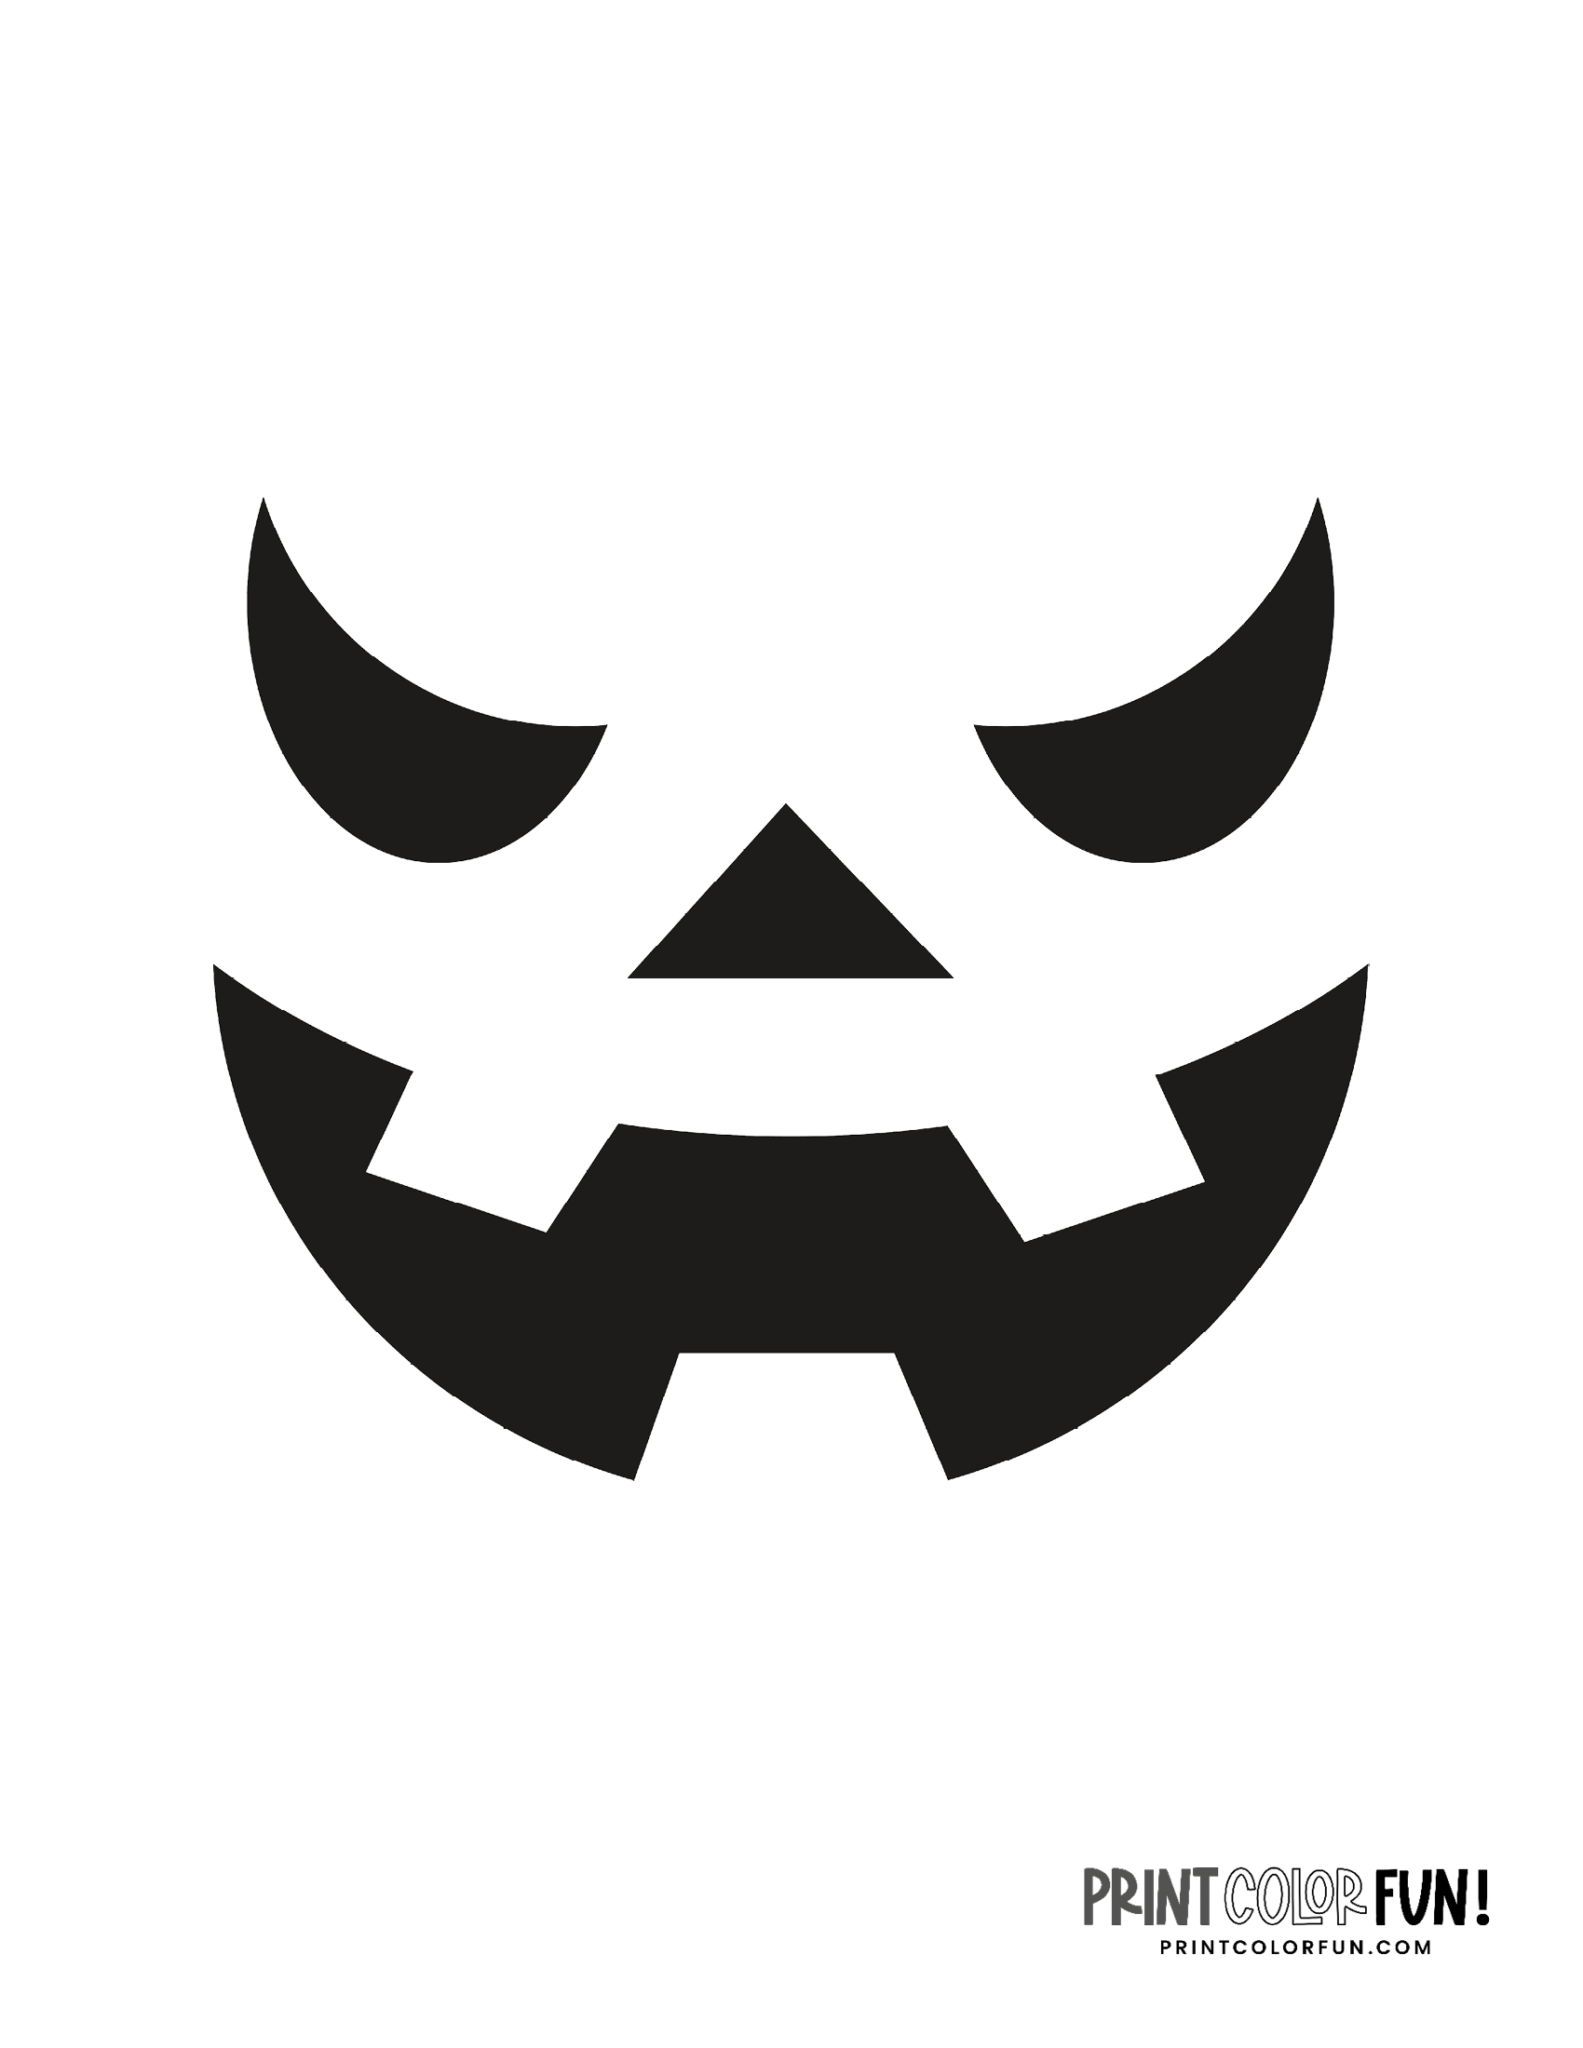 30 Halloween pumpkin face template stencils for carving Jack o'lanterns ...